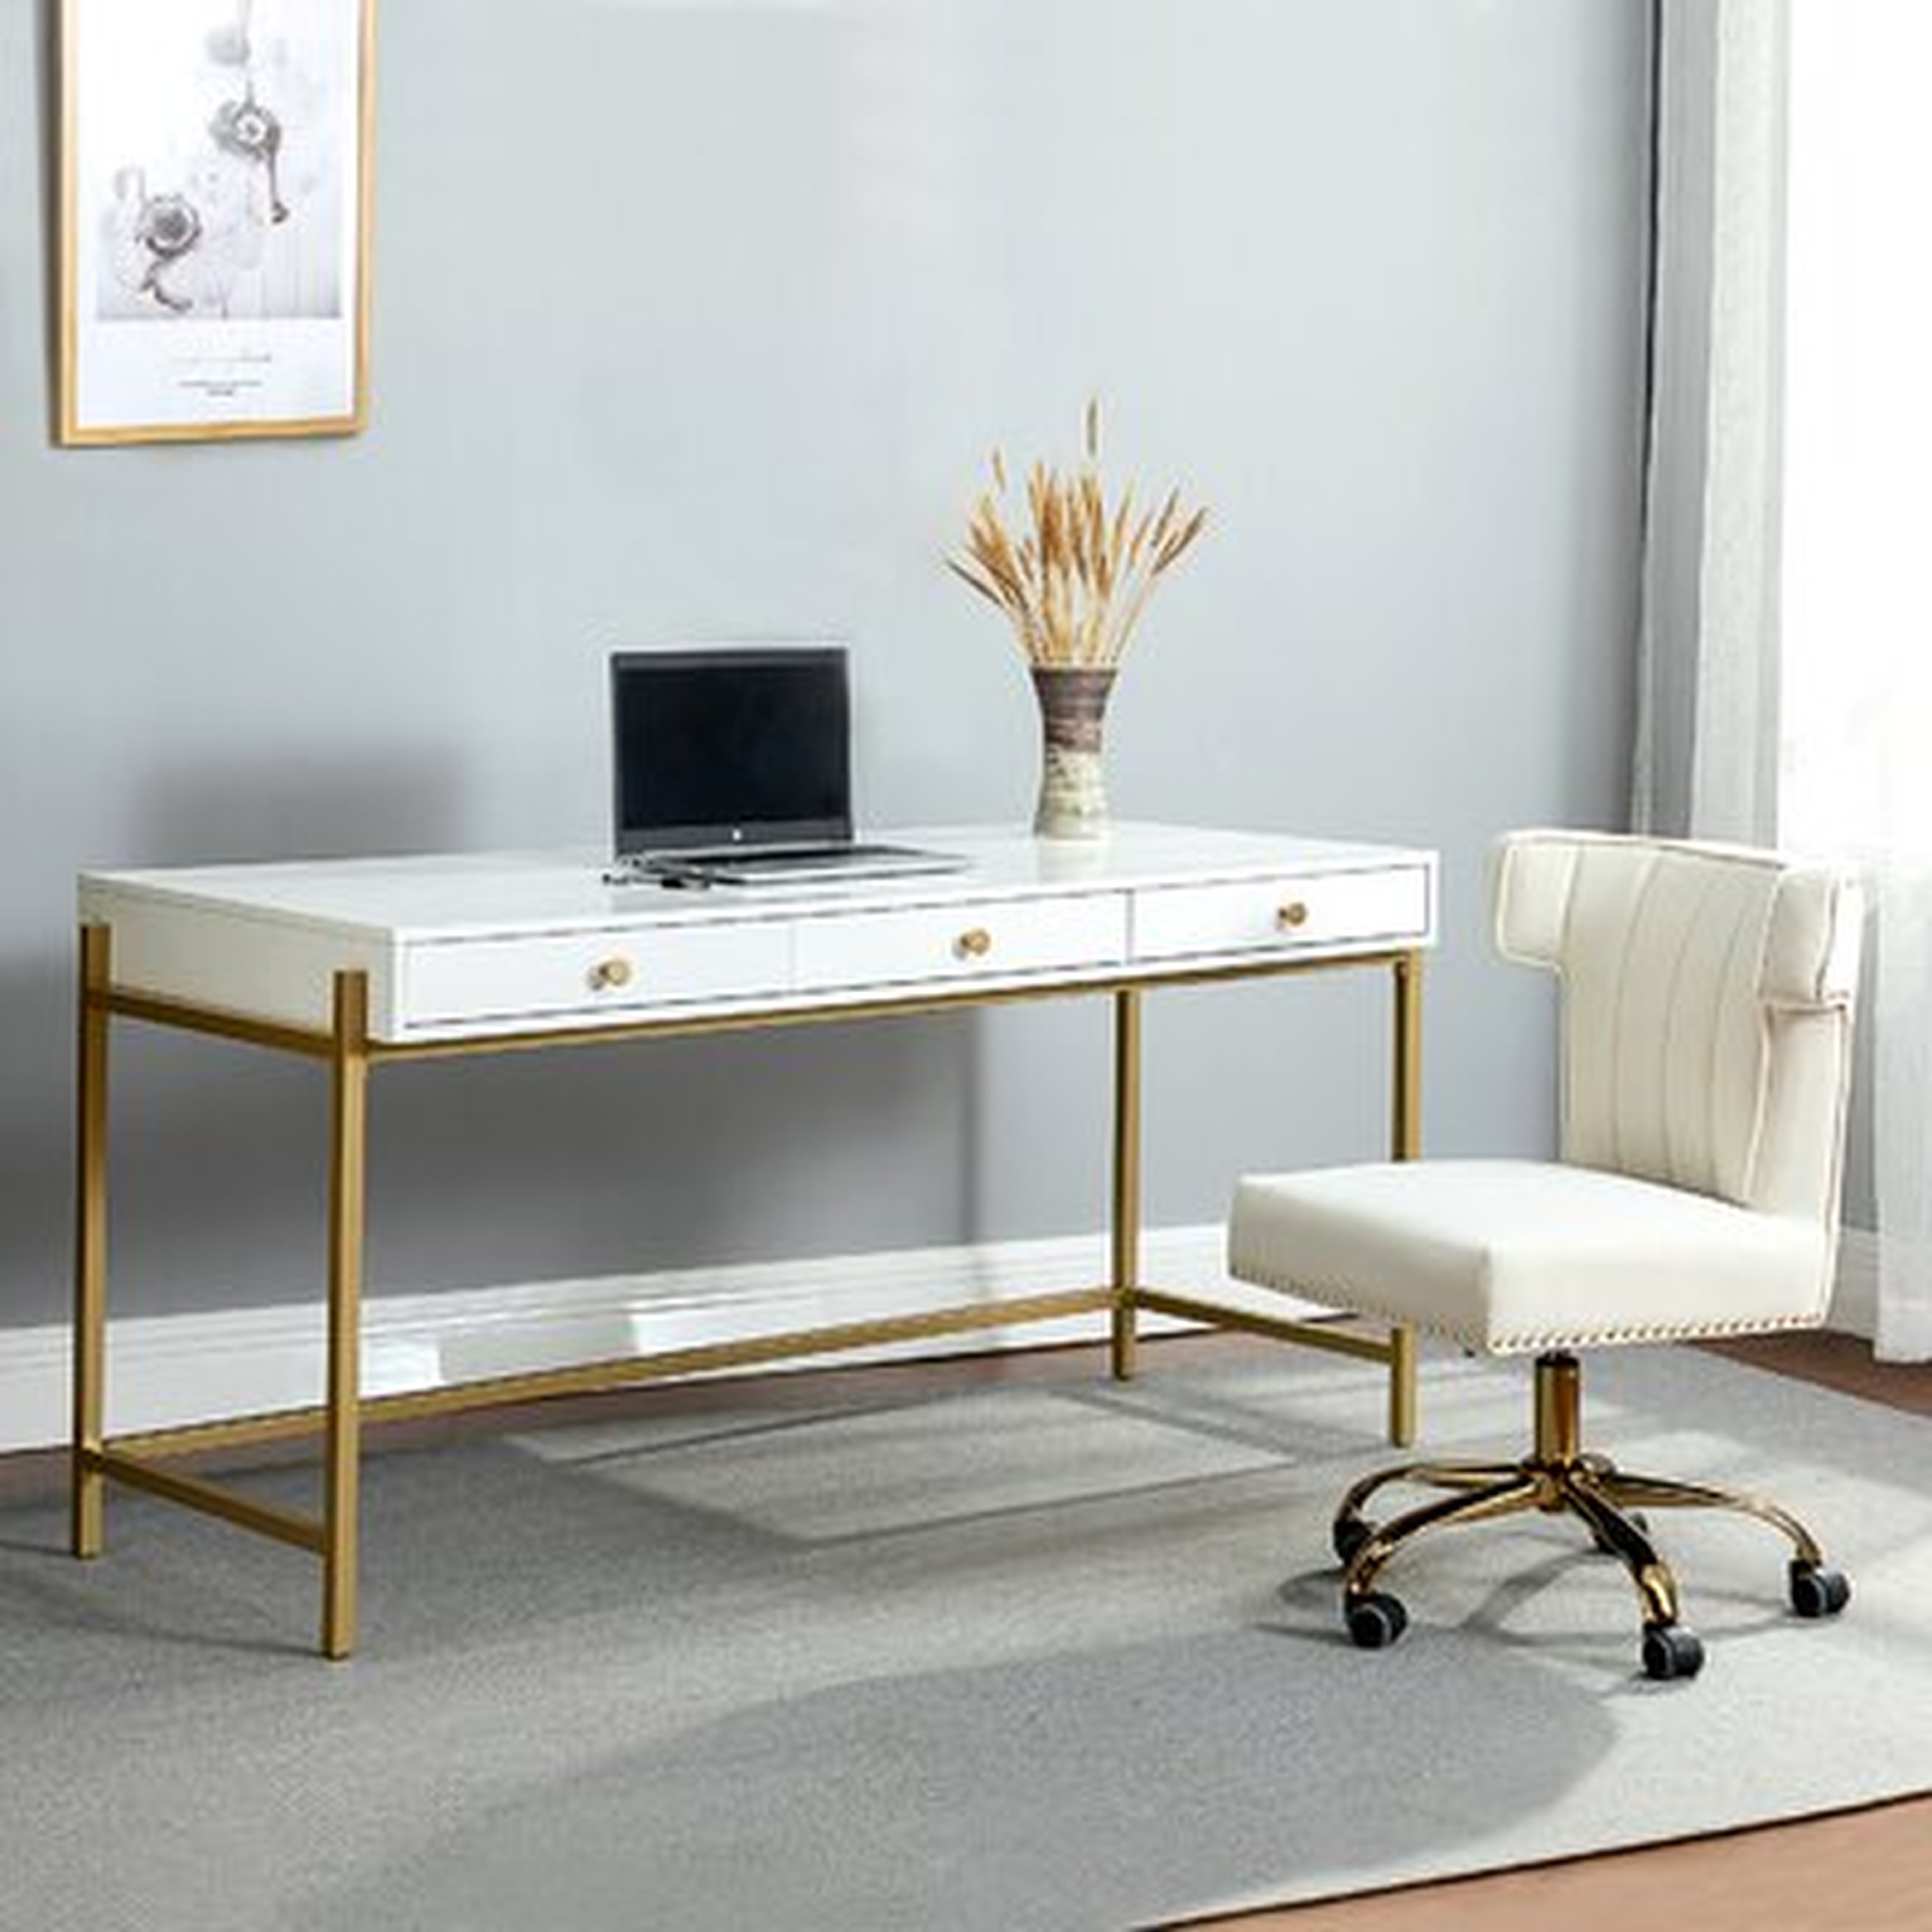 Traxler Desk and Chair Set - Wayfair